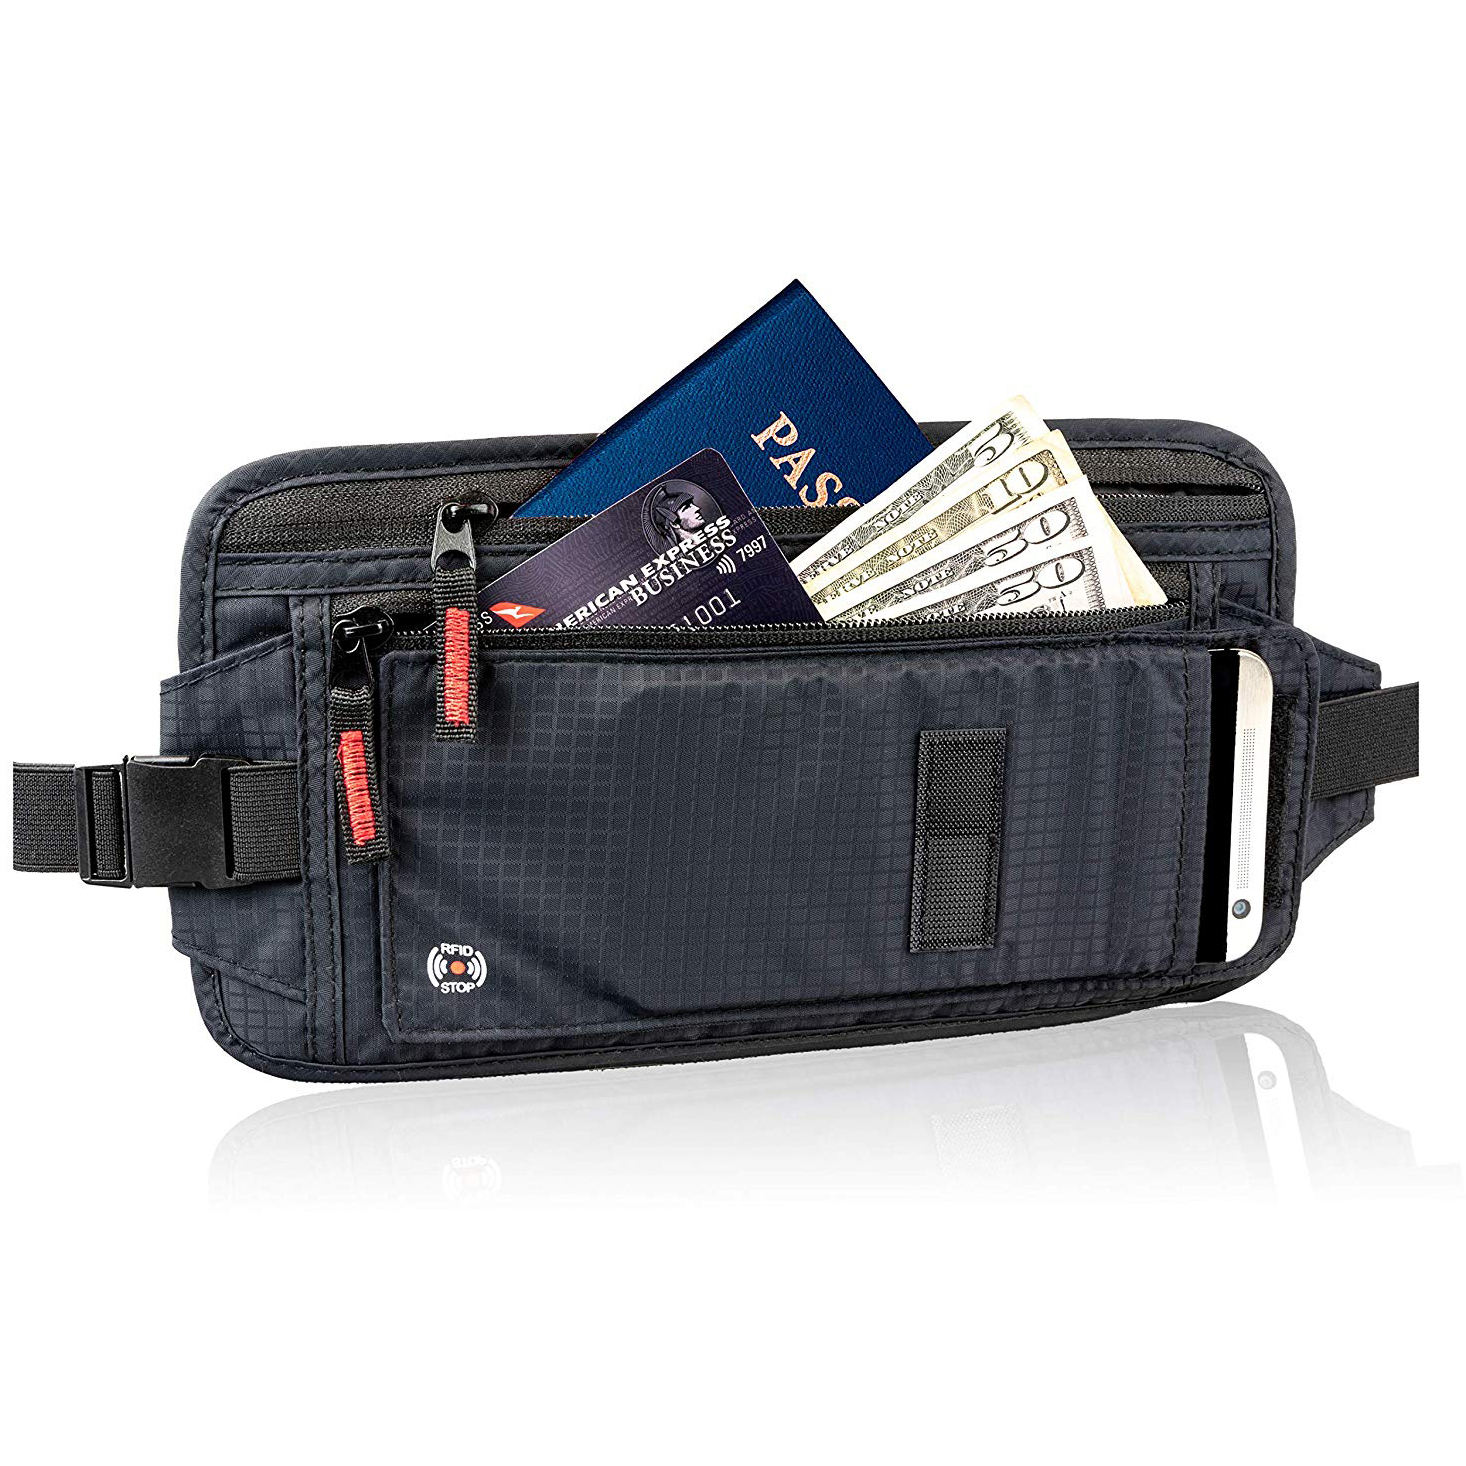 RFID Travel Money Belt - Hidden Holder For Passport - Secret, Safe Waist Wallet